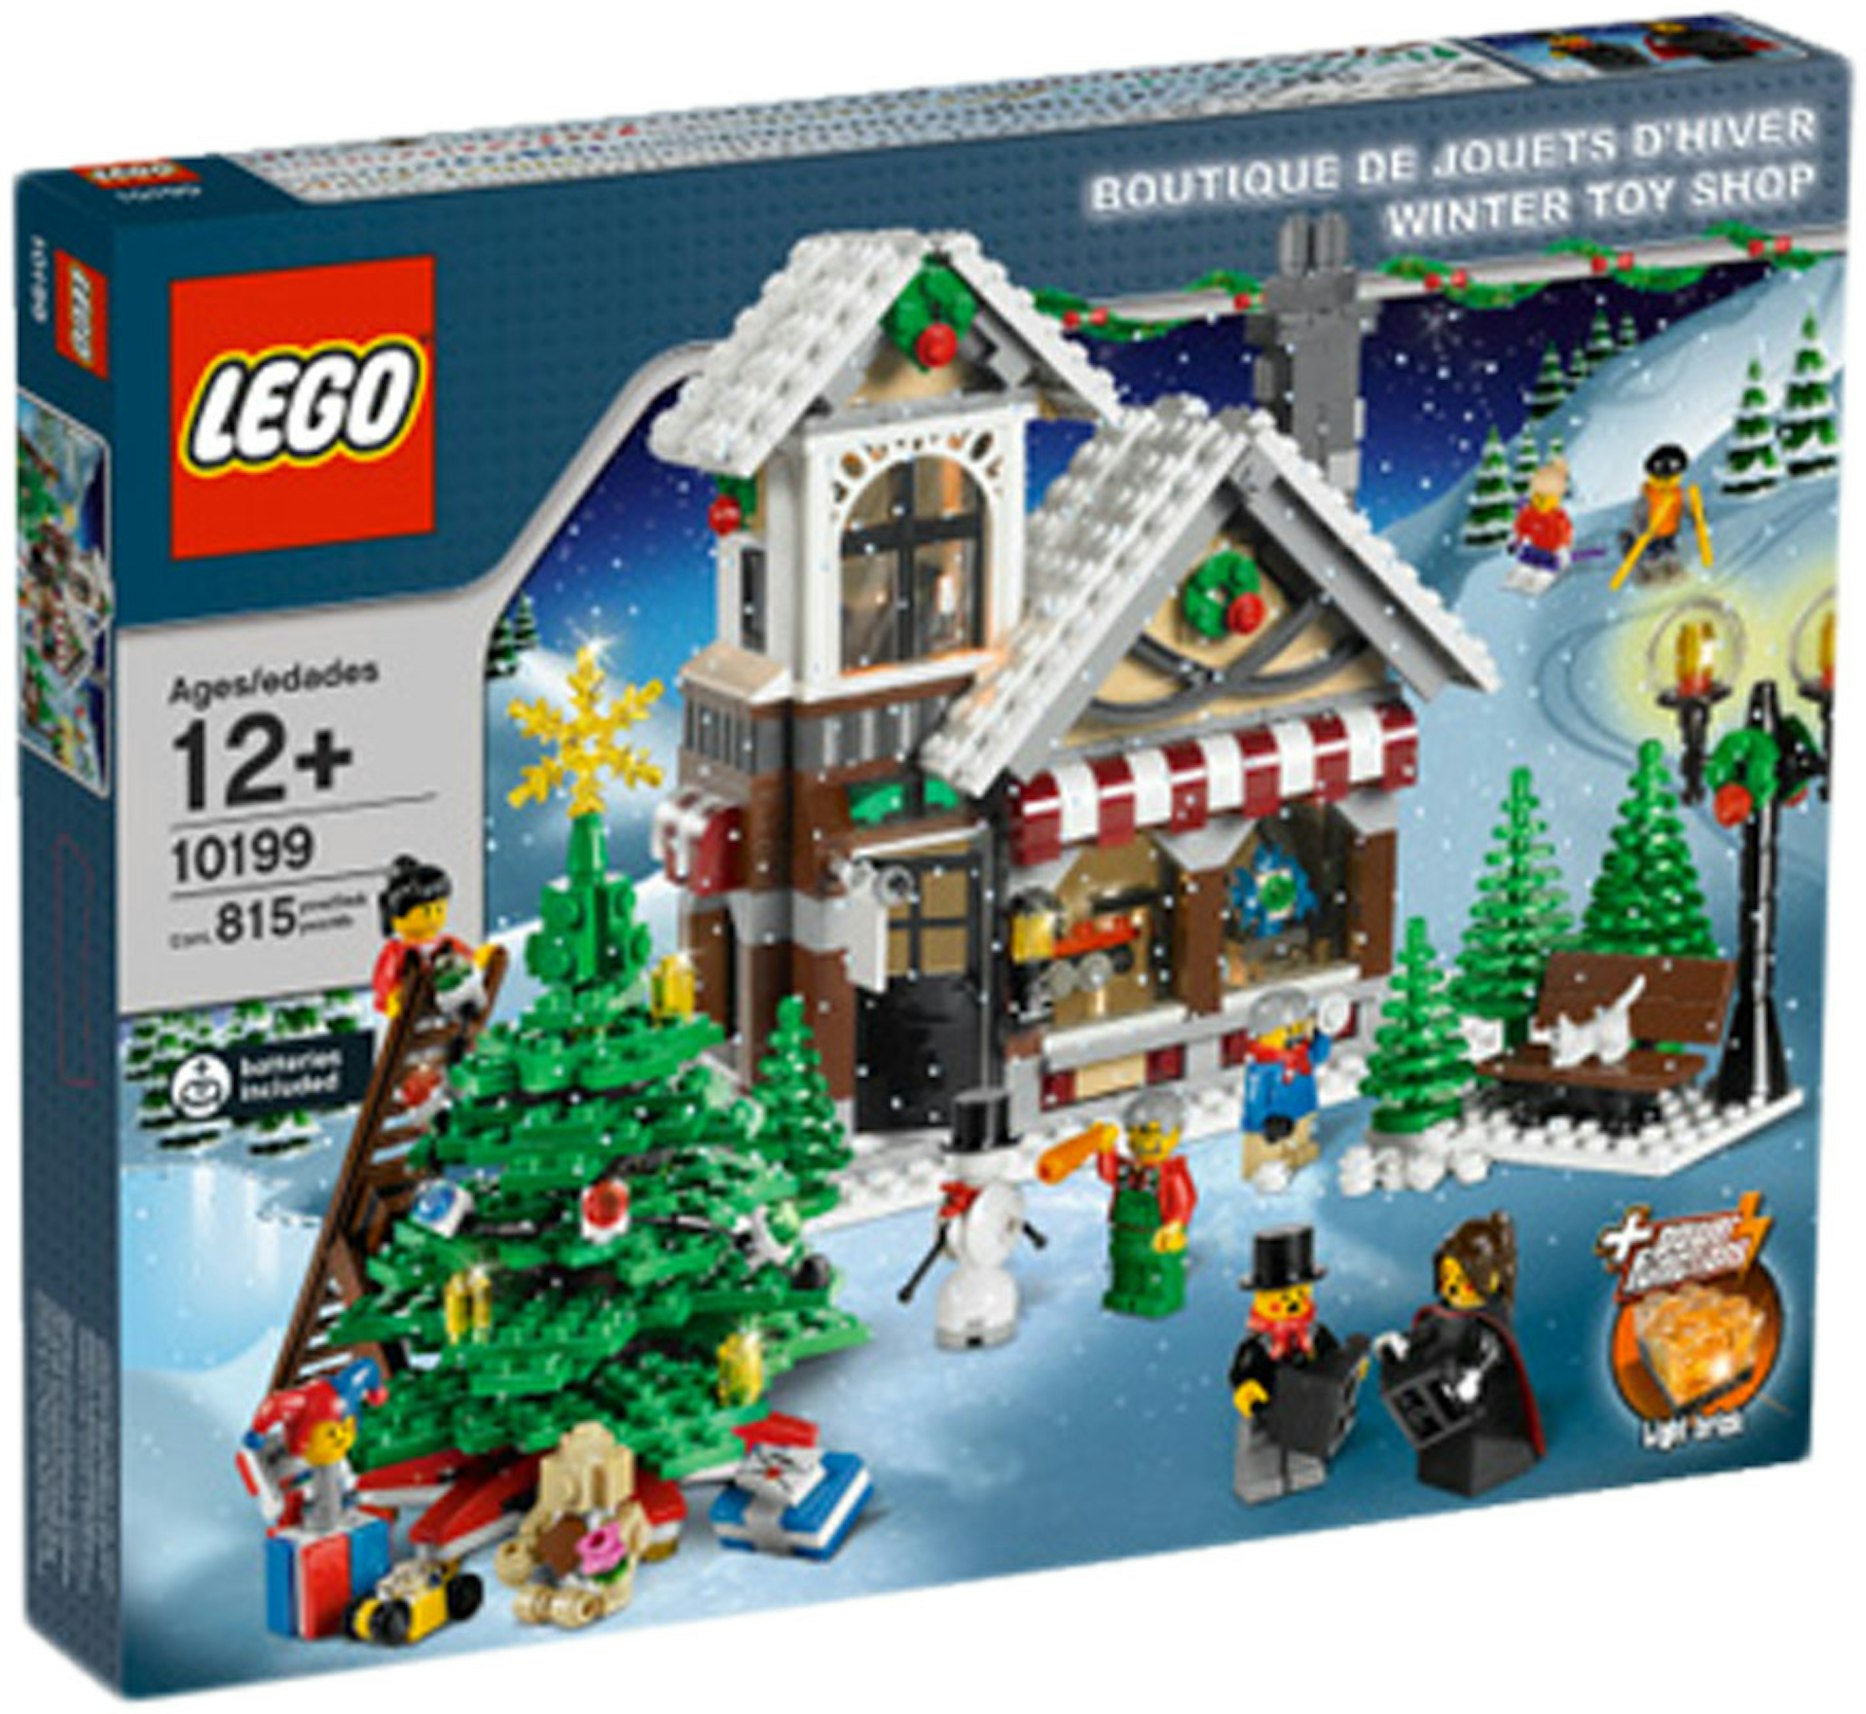 LEGO Creator Winter Village Toy Shop Set 10199 - US